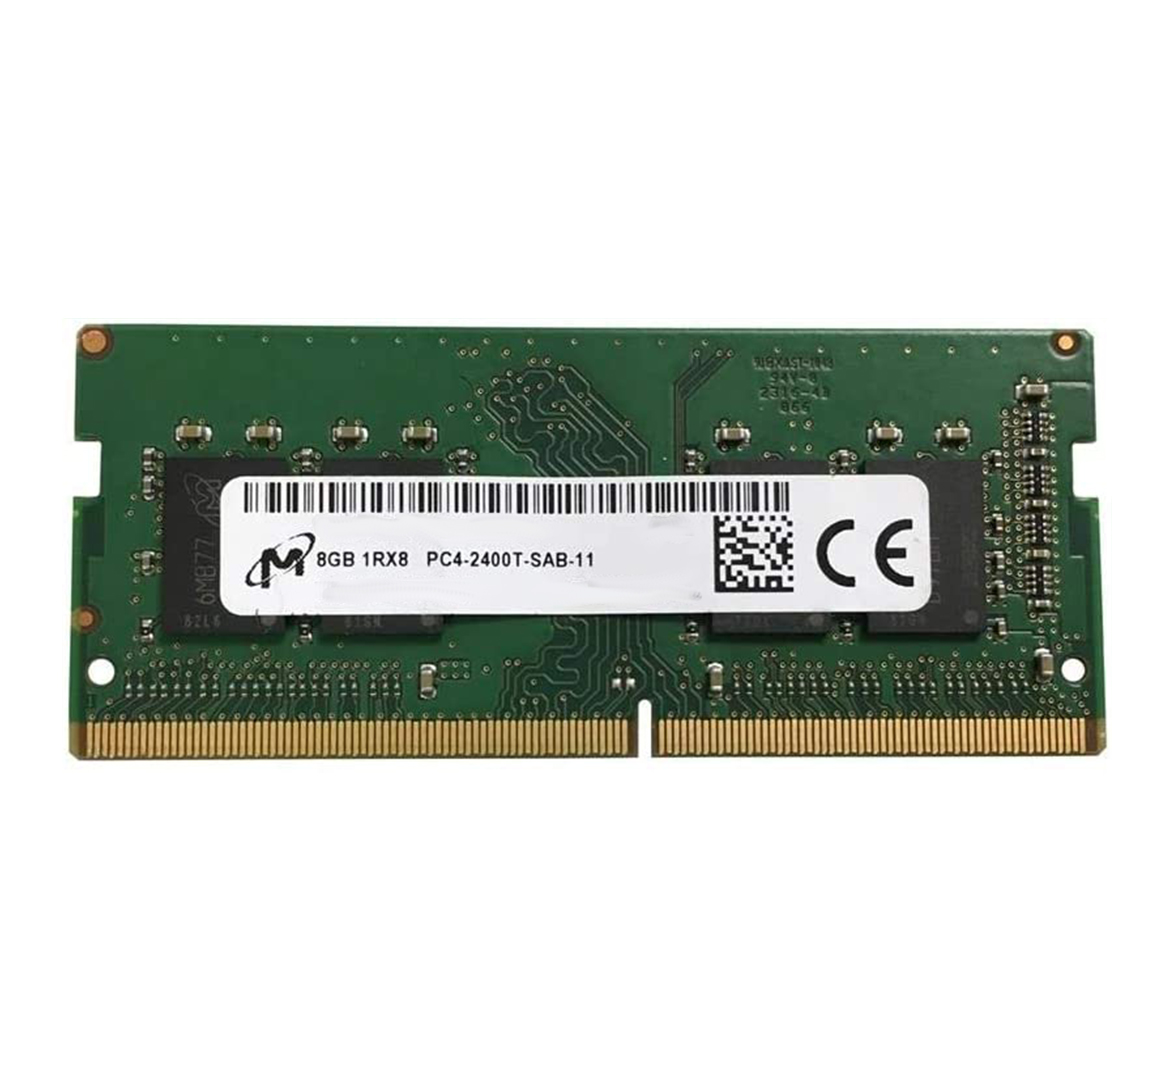 MICRON 8GB RAM DDR4 Internal Memory Module, 1Rx8 PC4-2400, 2400T, 260-Pin SODIMM, Laptop Notebook Memory Ram